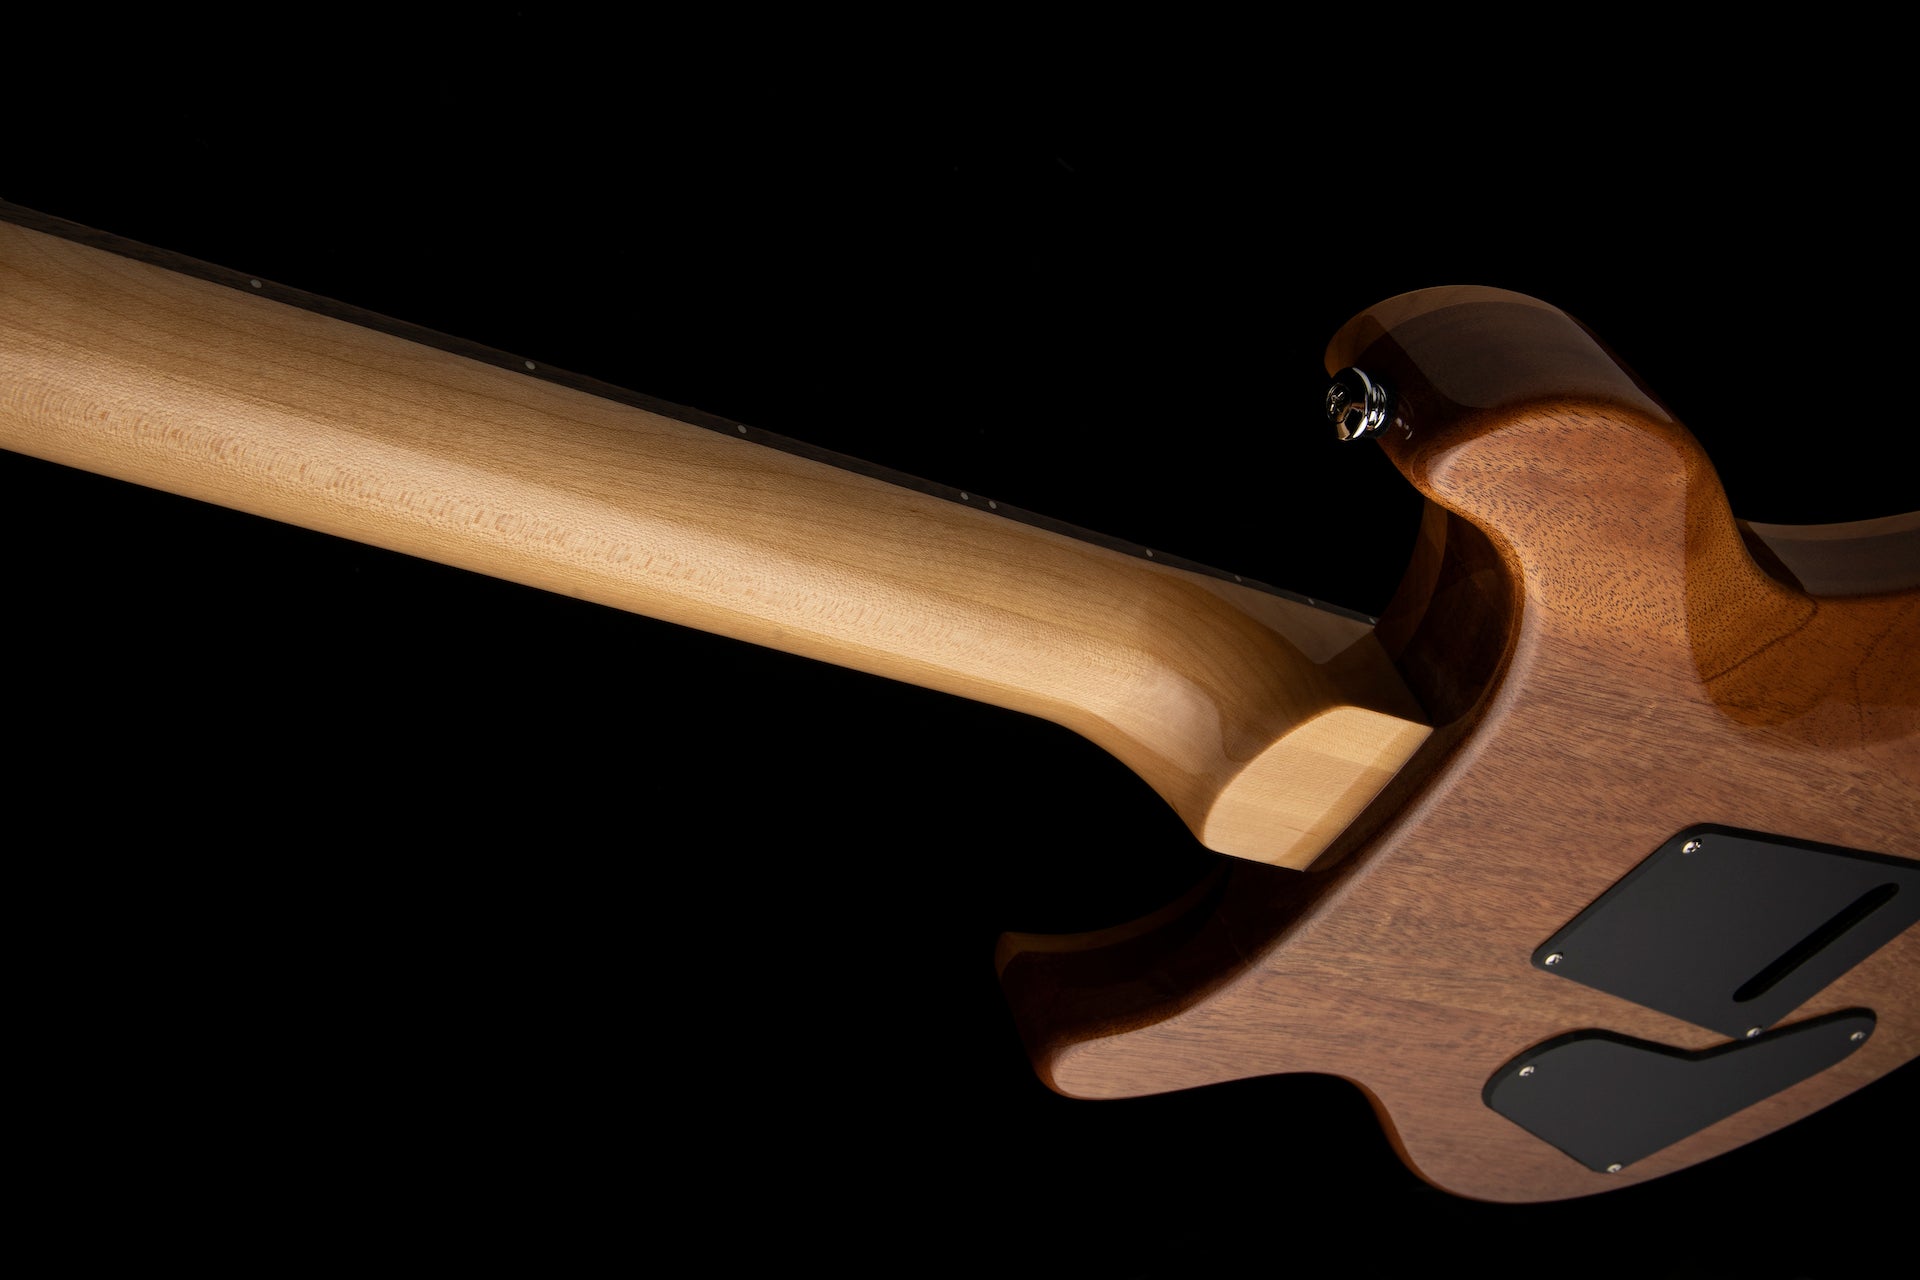 PRS SE Custom 22 Semi-hollow Electric Guitar - Santana Yellow - HIENDGUITAR   PRS SE 